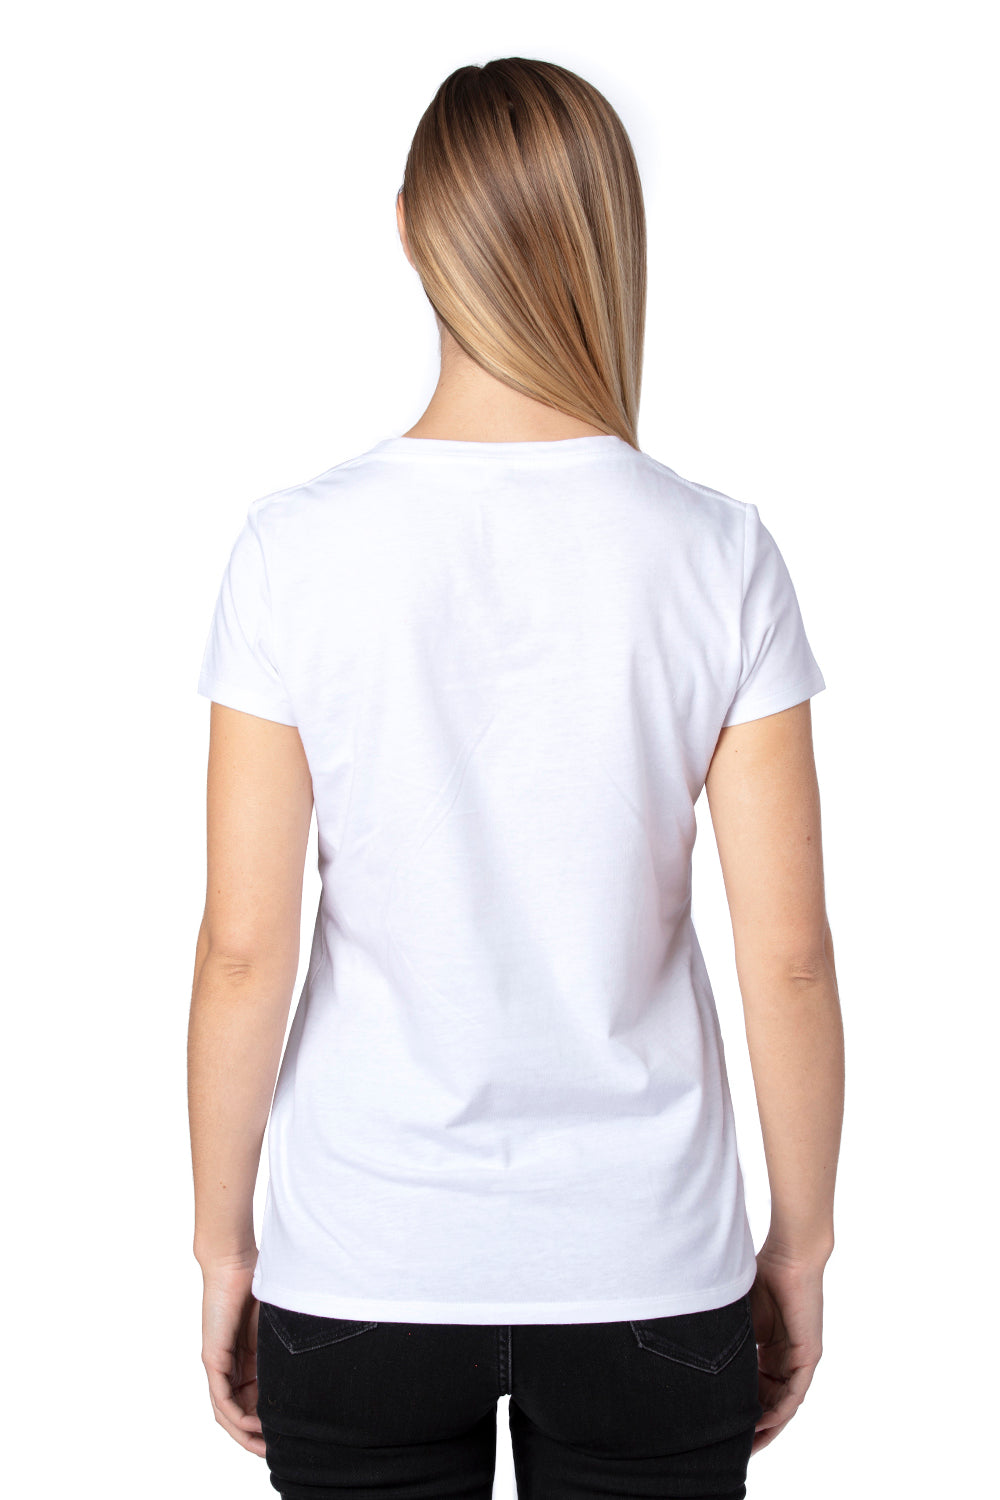 Threadfast Apparel 200RV Womens Ultimate Short Sleeve V-Neck T-Shirt White Back